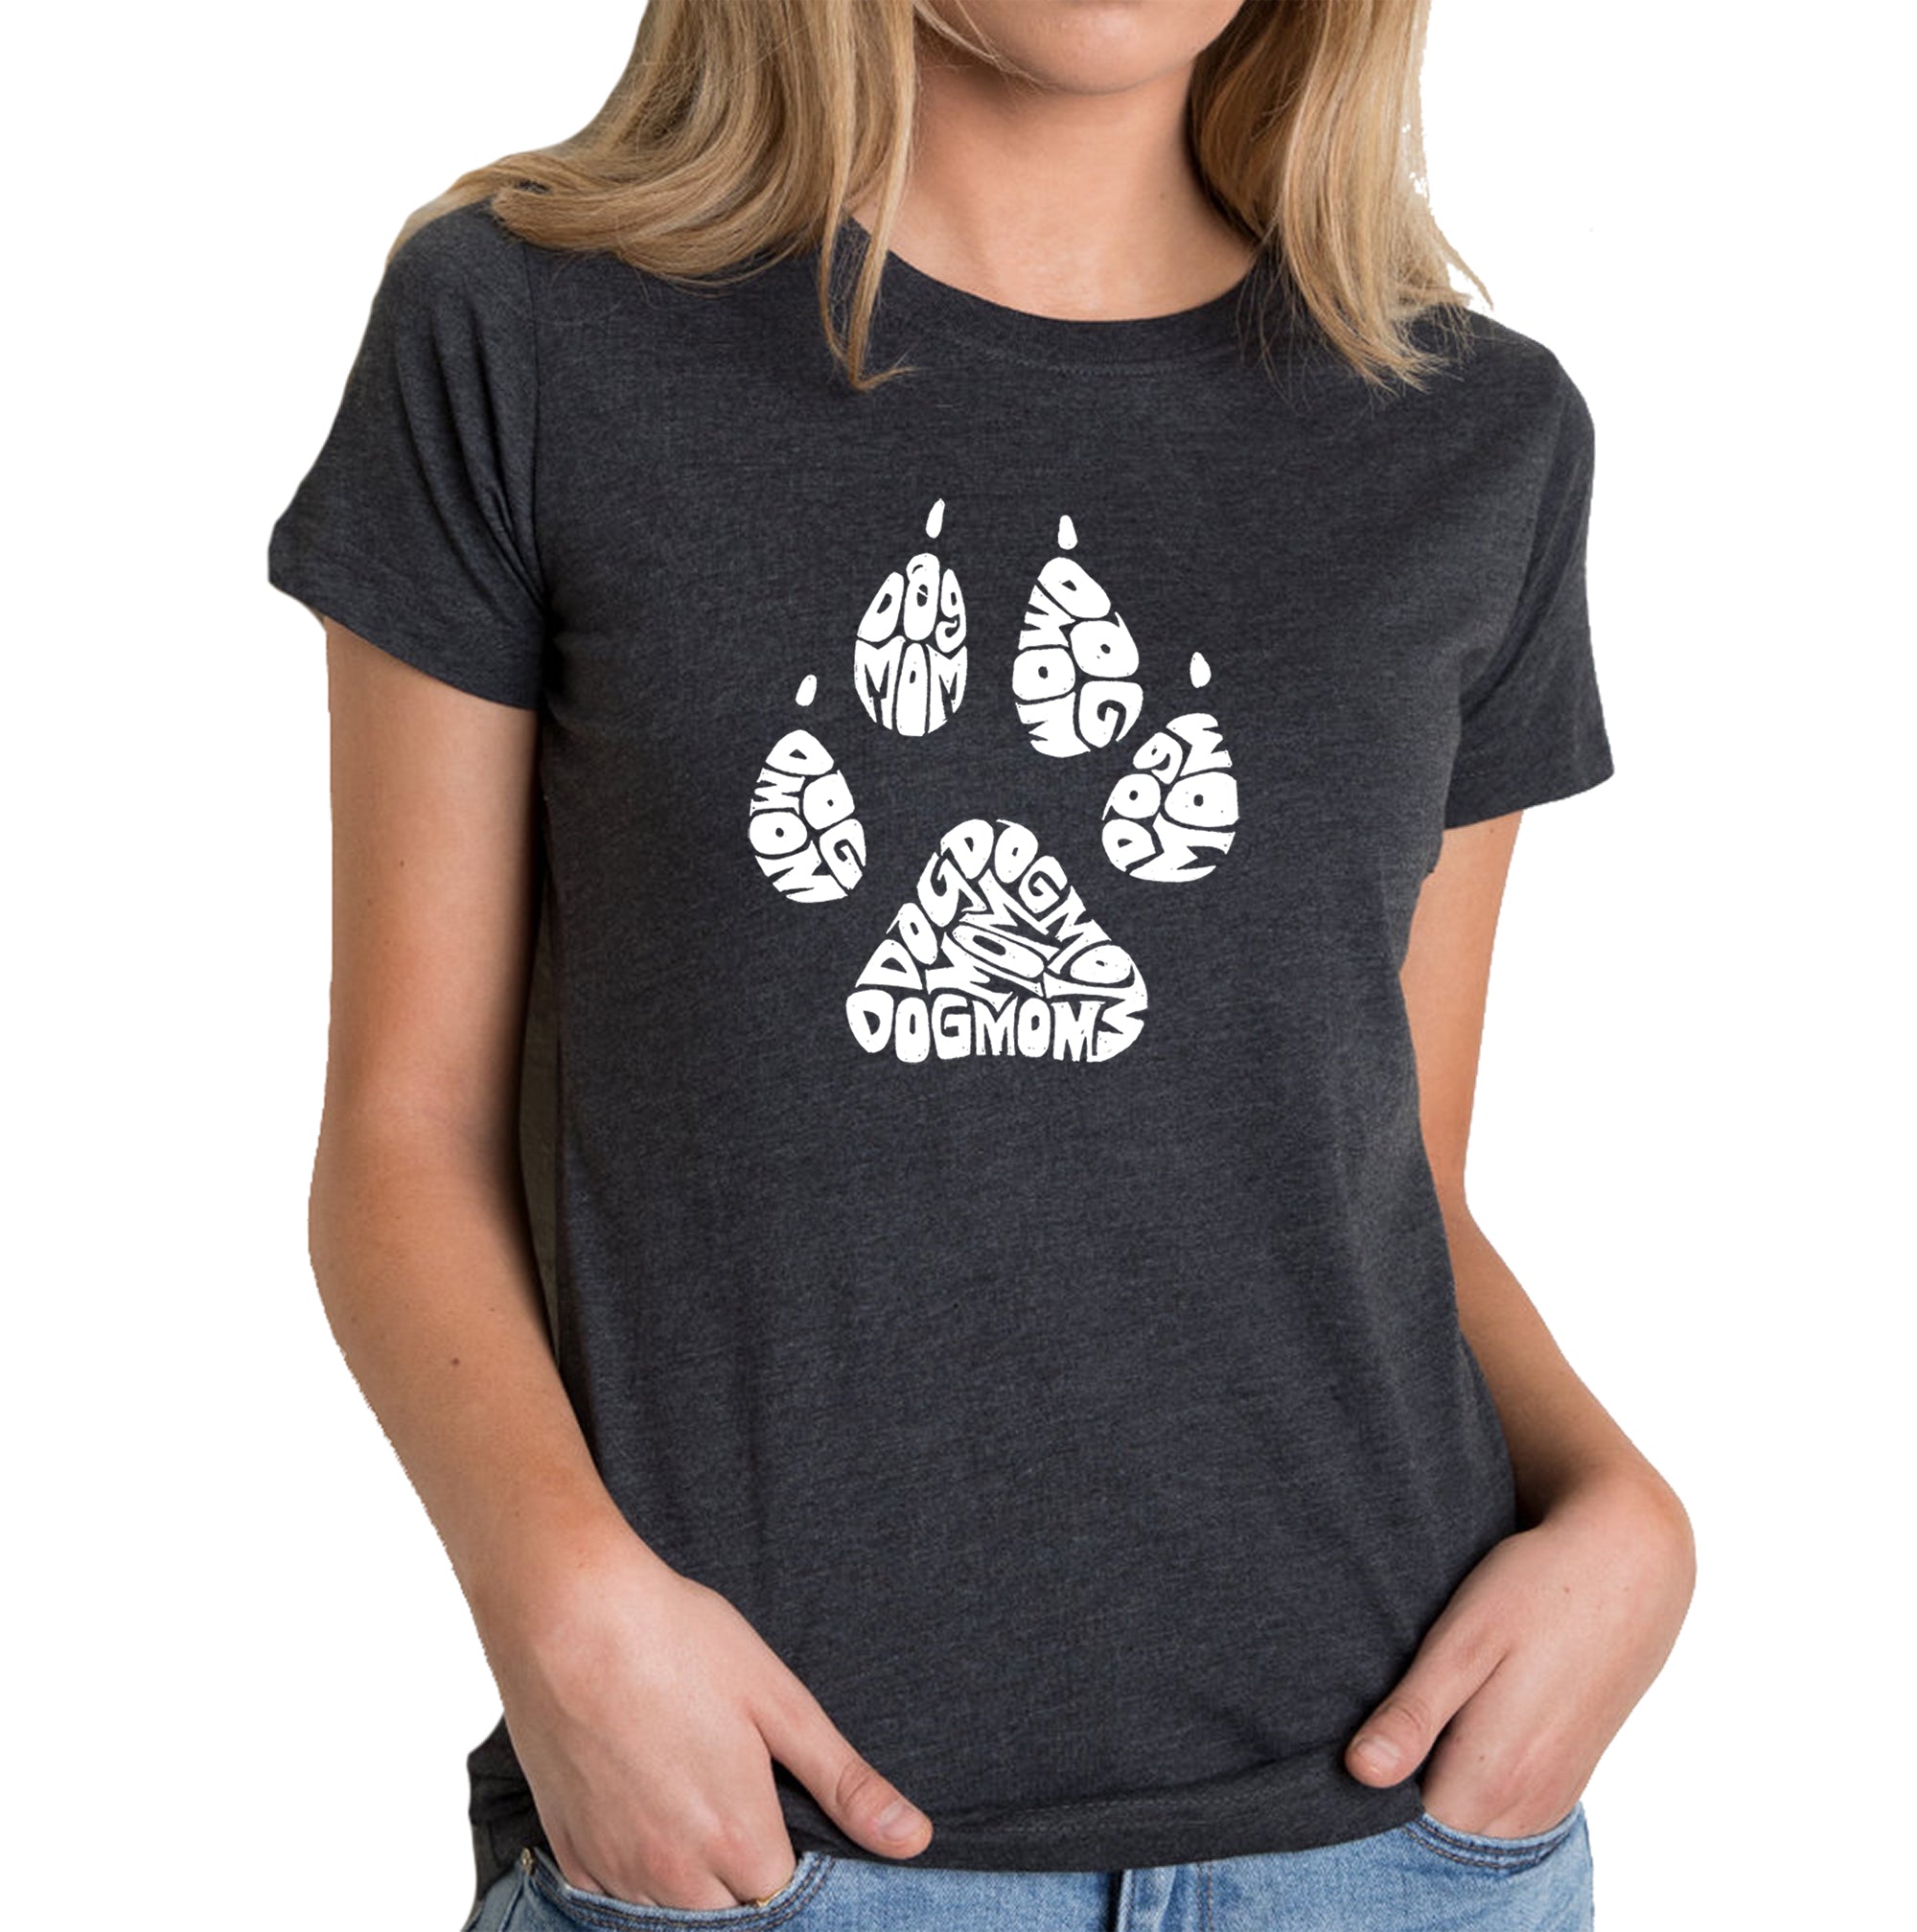 Dog Mom - Women's Premium Blend Word Art T-Shirt - Turquoise - Small